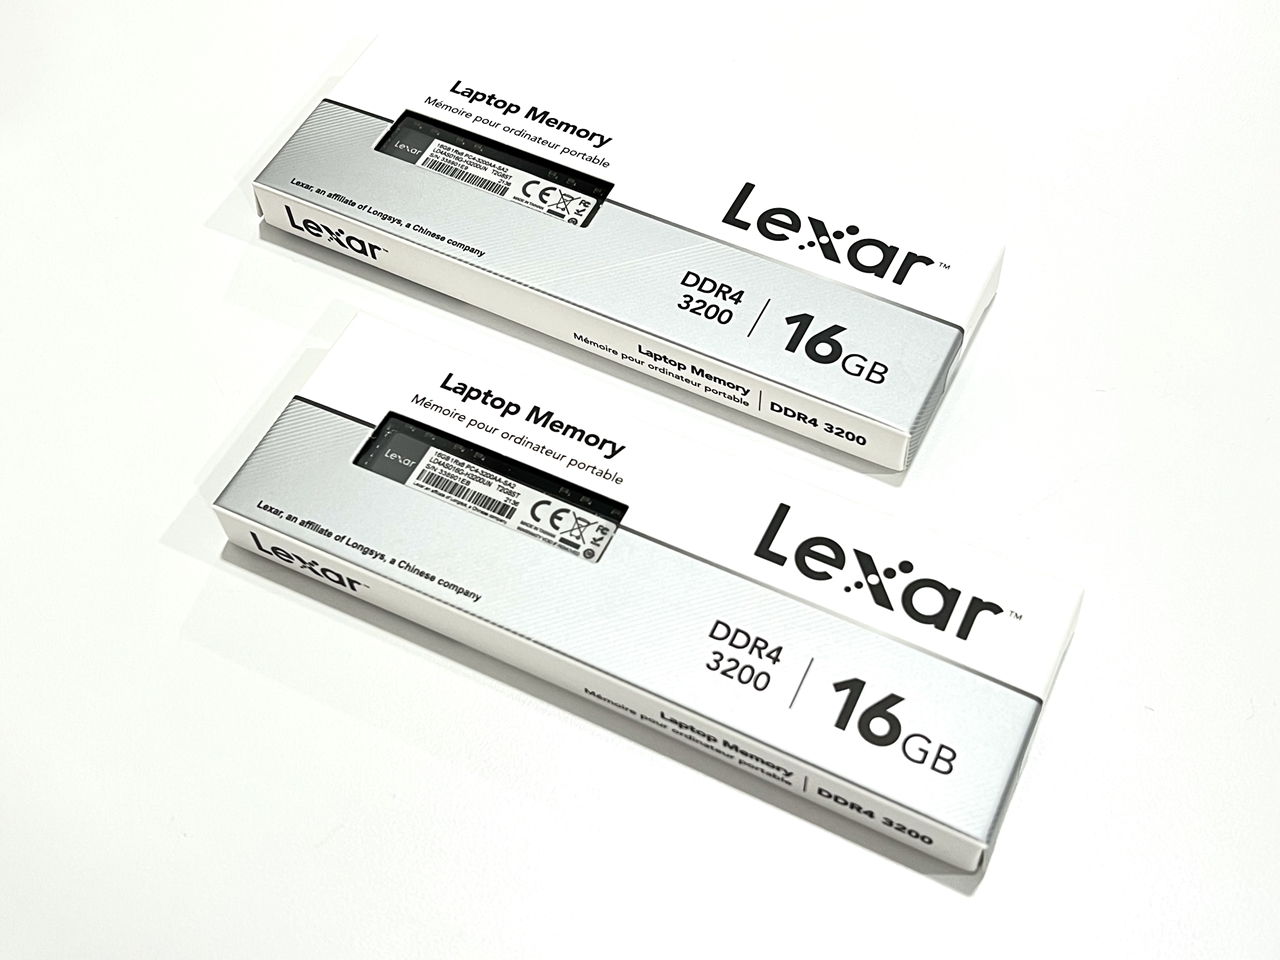 Lexar DDR4-2666 SODIMM Laptop Memory Review - PCTestBench